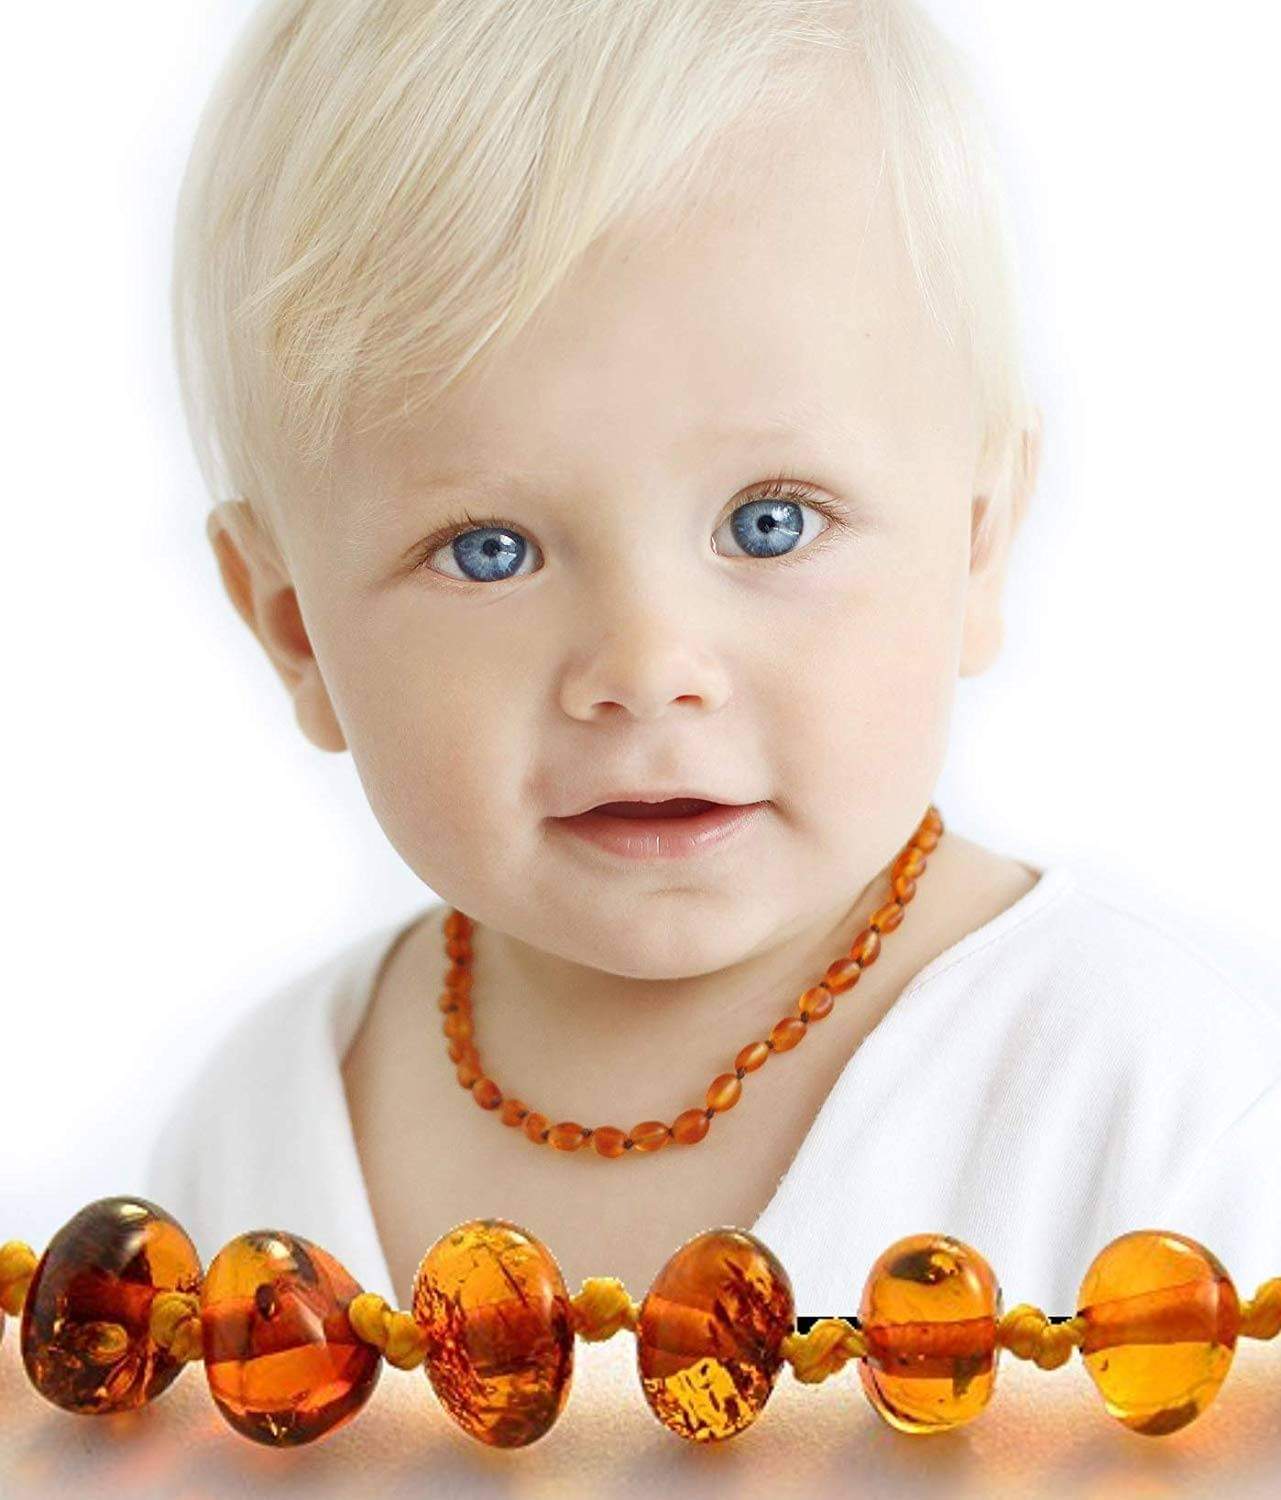 amber teething necklace buy buy baby